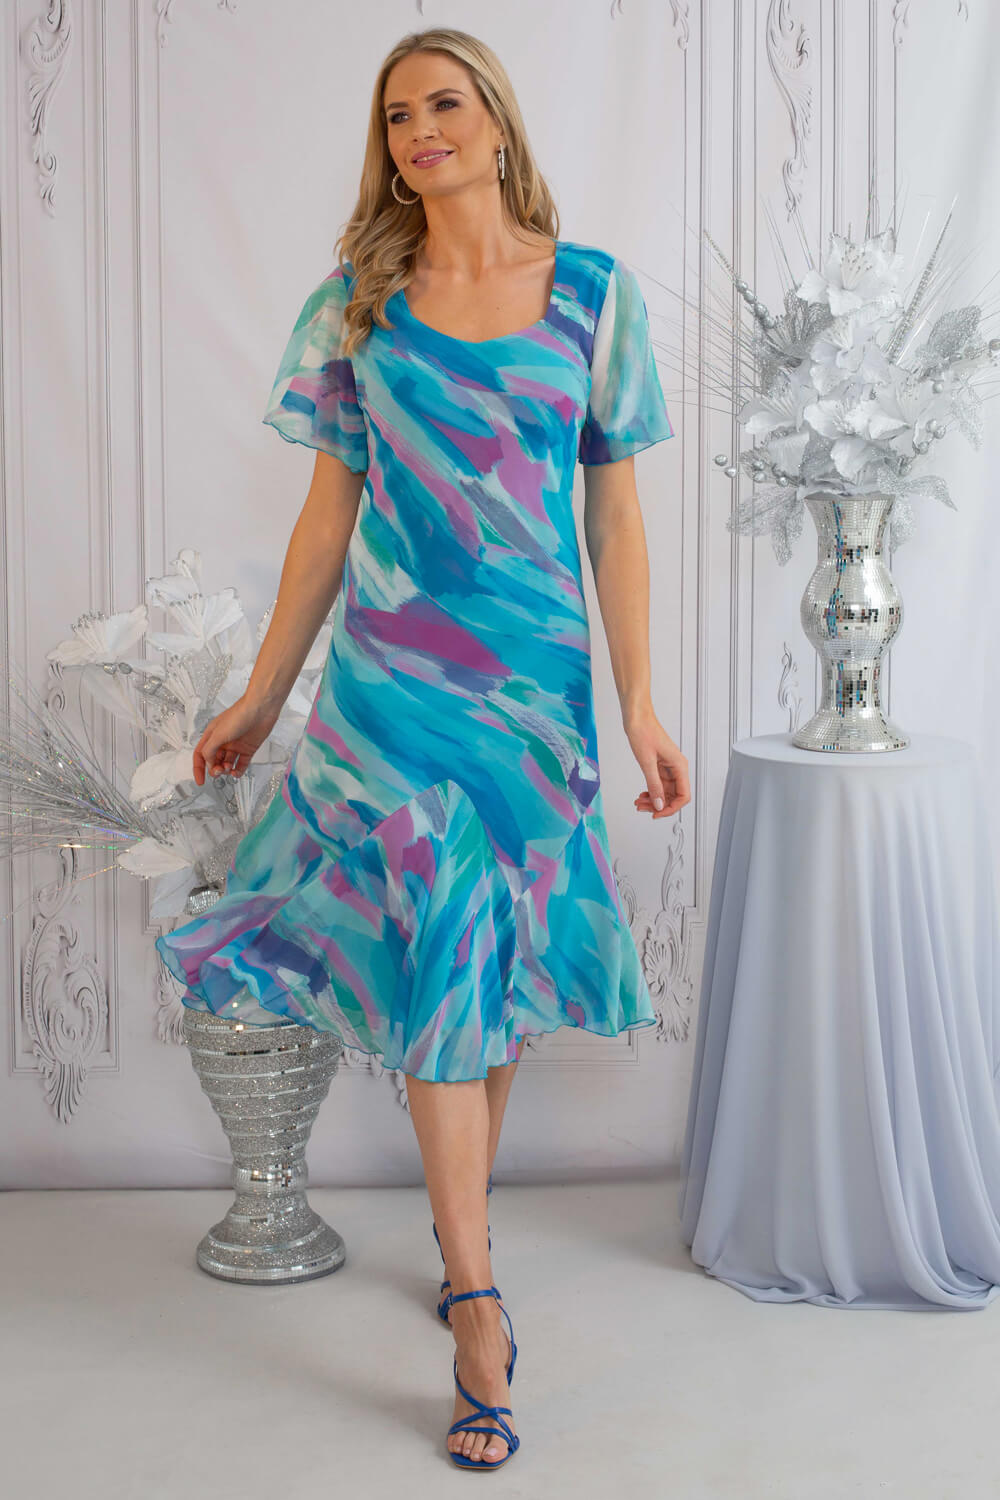 Turquoise Julianna Abstract Print Chiffon Dress, Image 3 of 4